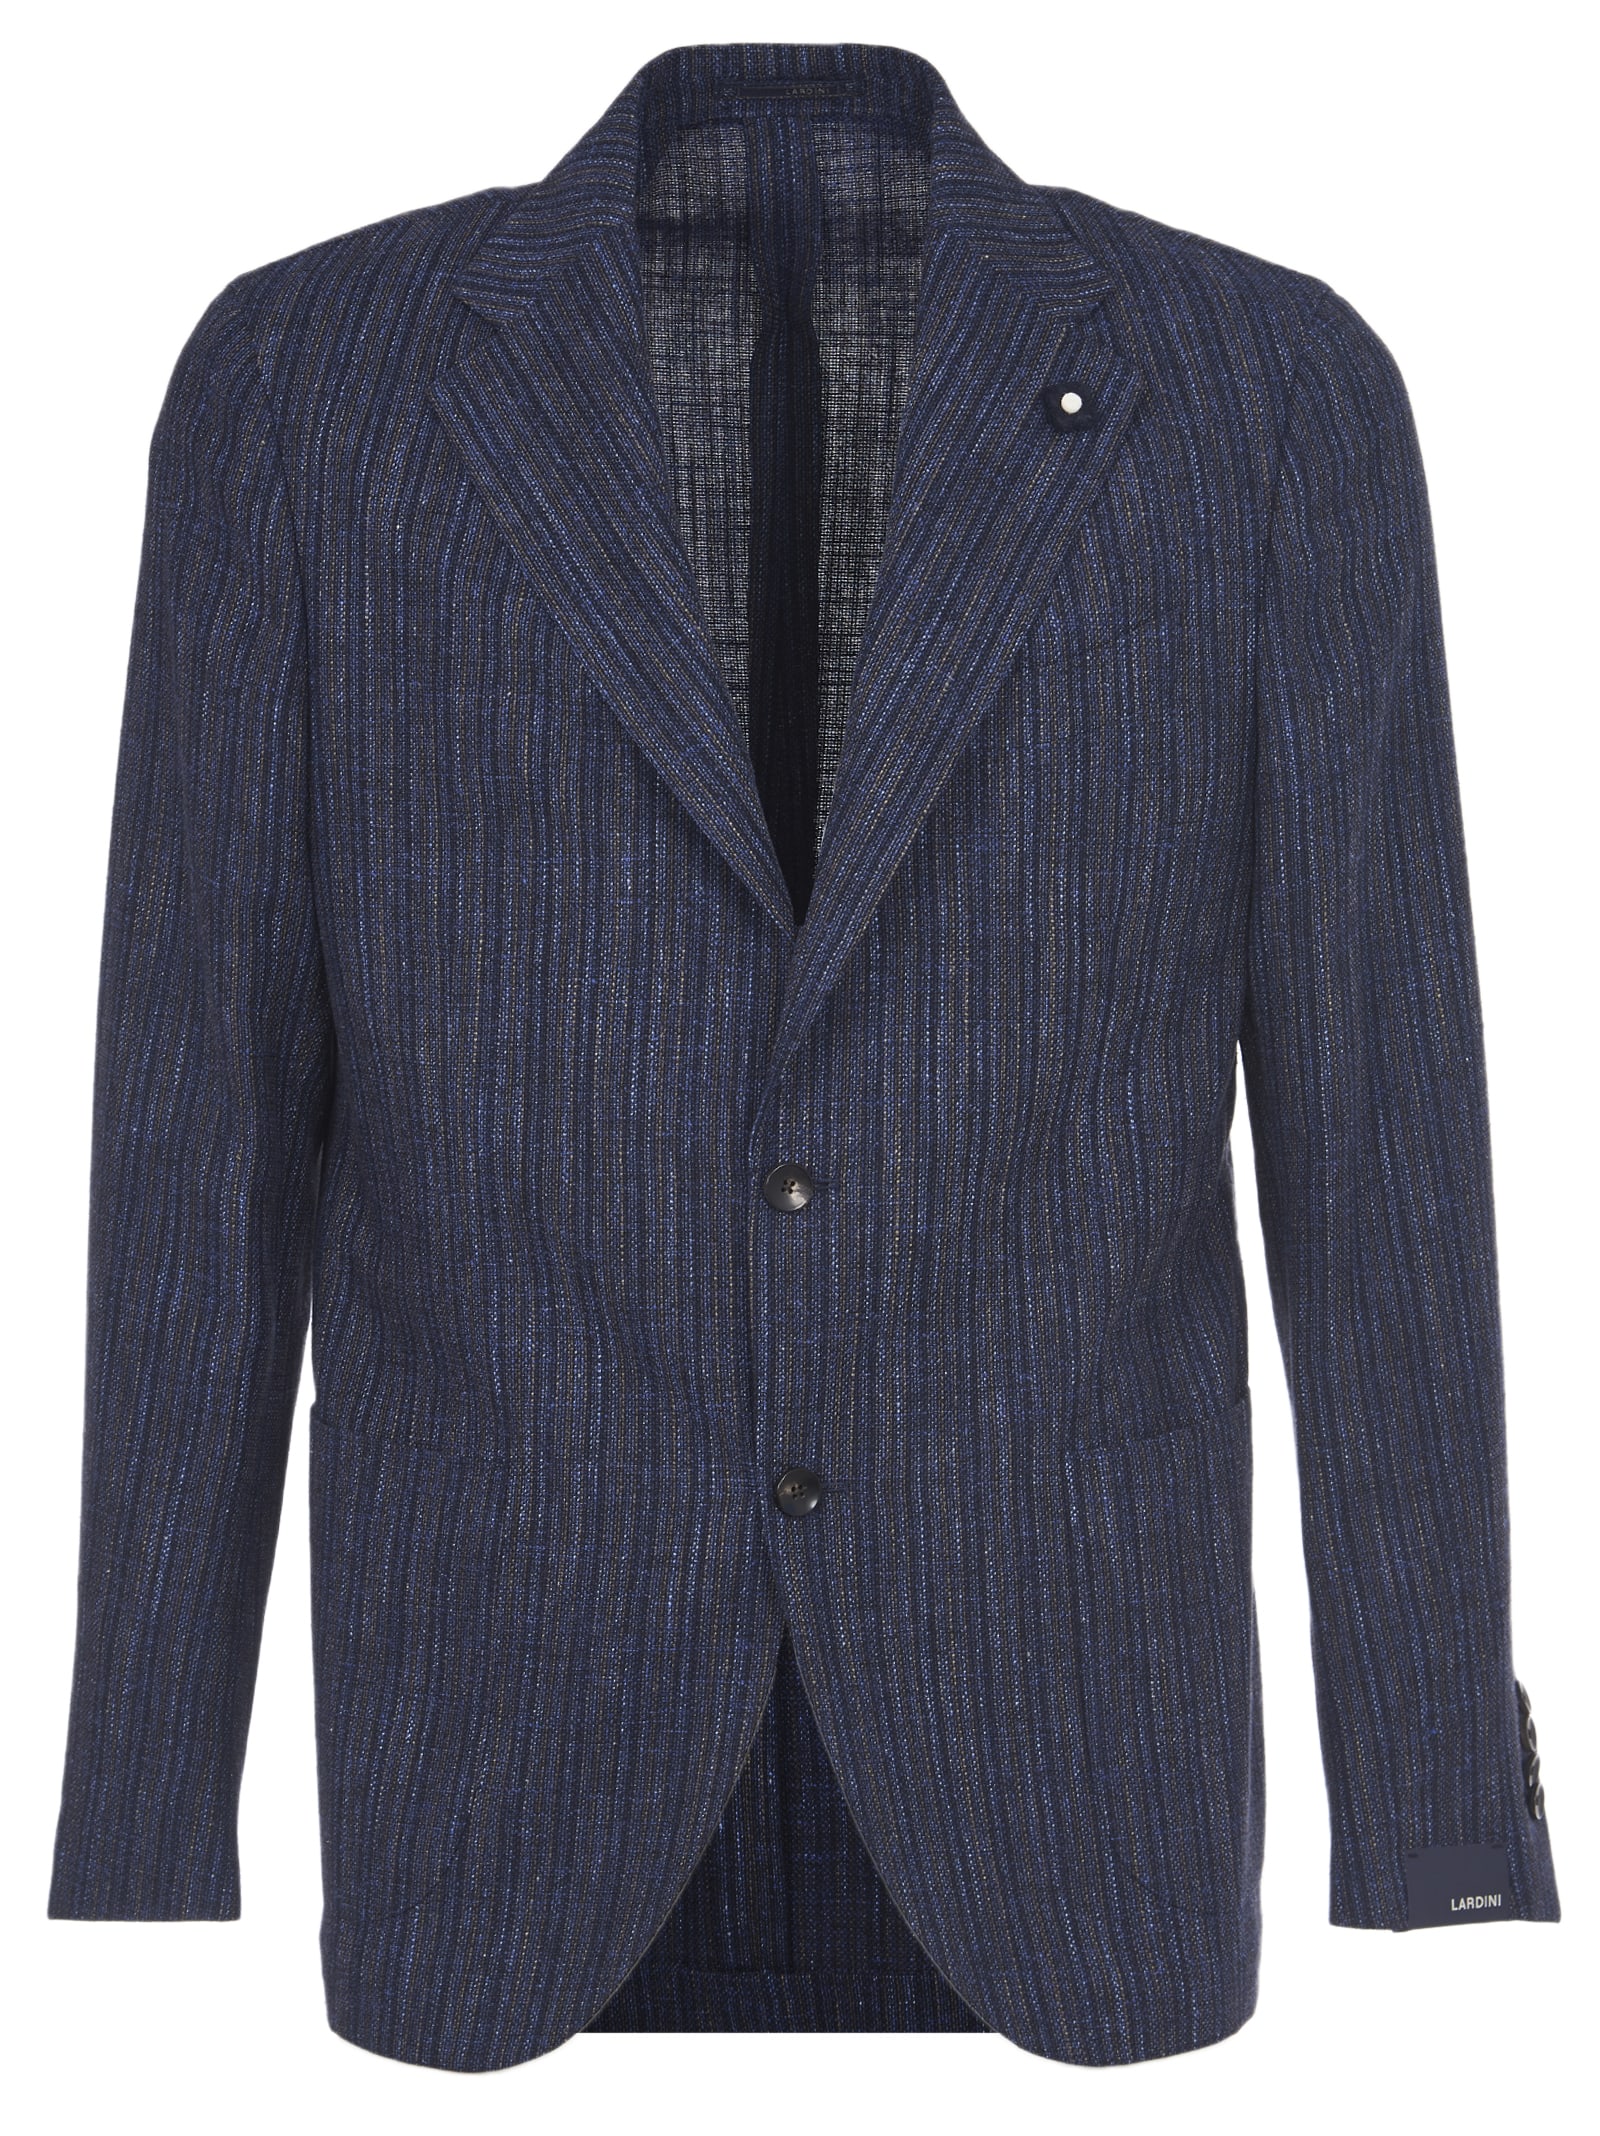 Lardini Blue Brown Pinstripe Jacket